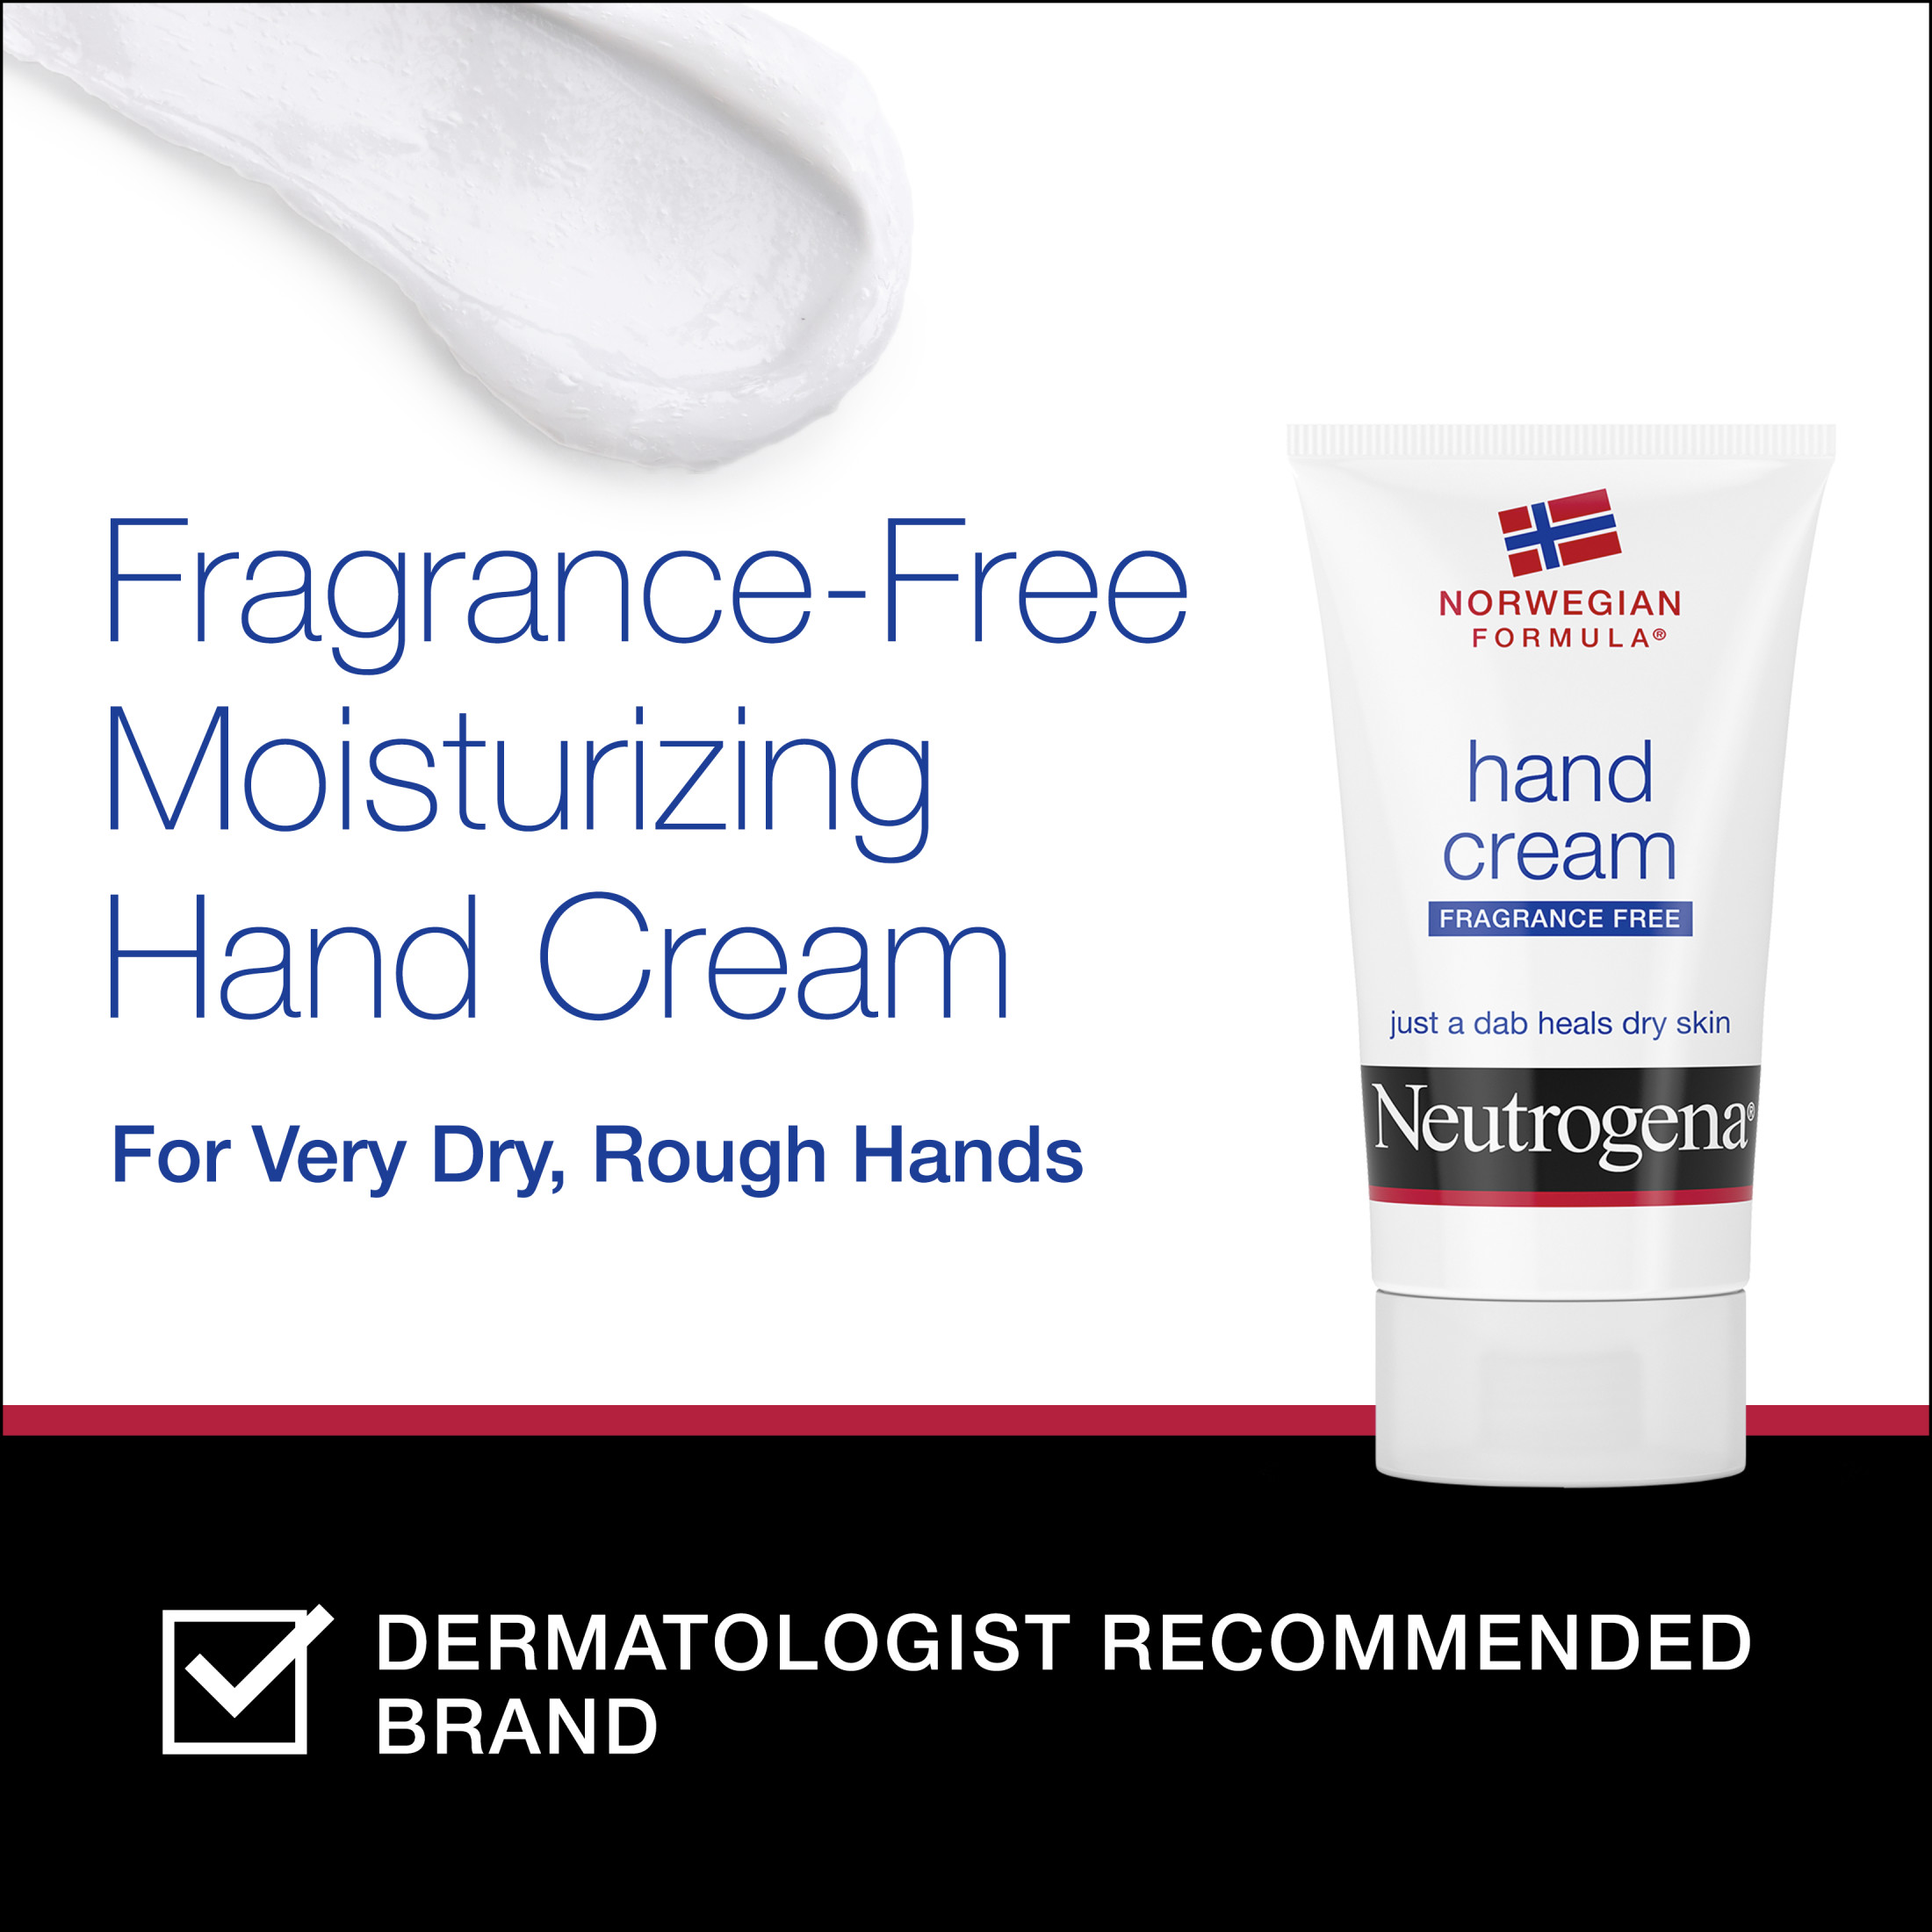 Neutrogena Norwegian Formula Dry Hand and Body Cream, Fragrance-Free Lotion, 2 oz - image 5 of 10